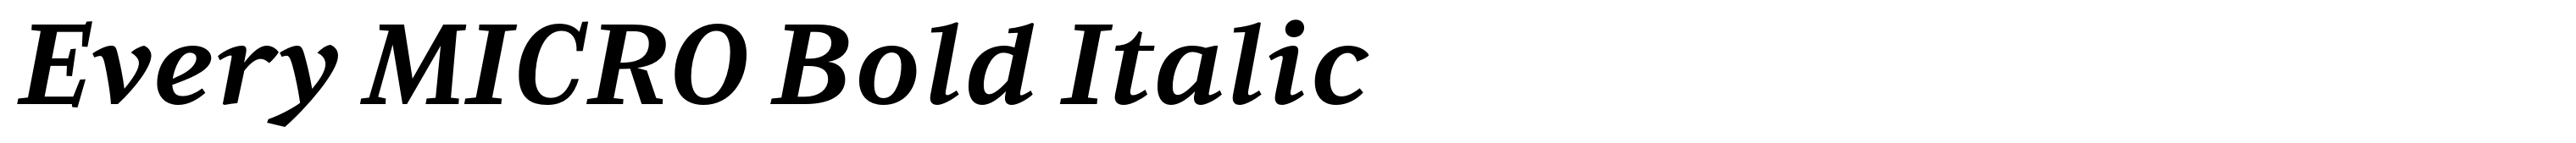 Every MICRO Bold Italic